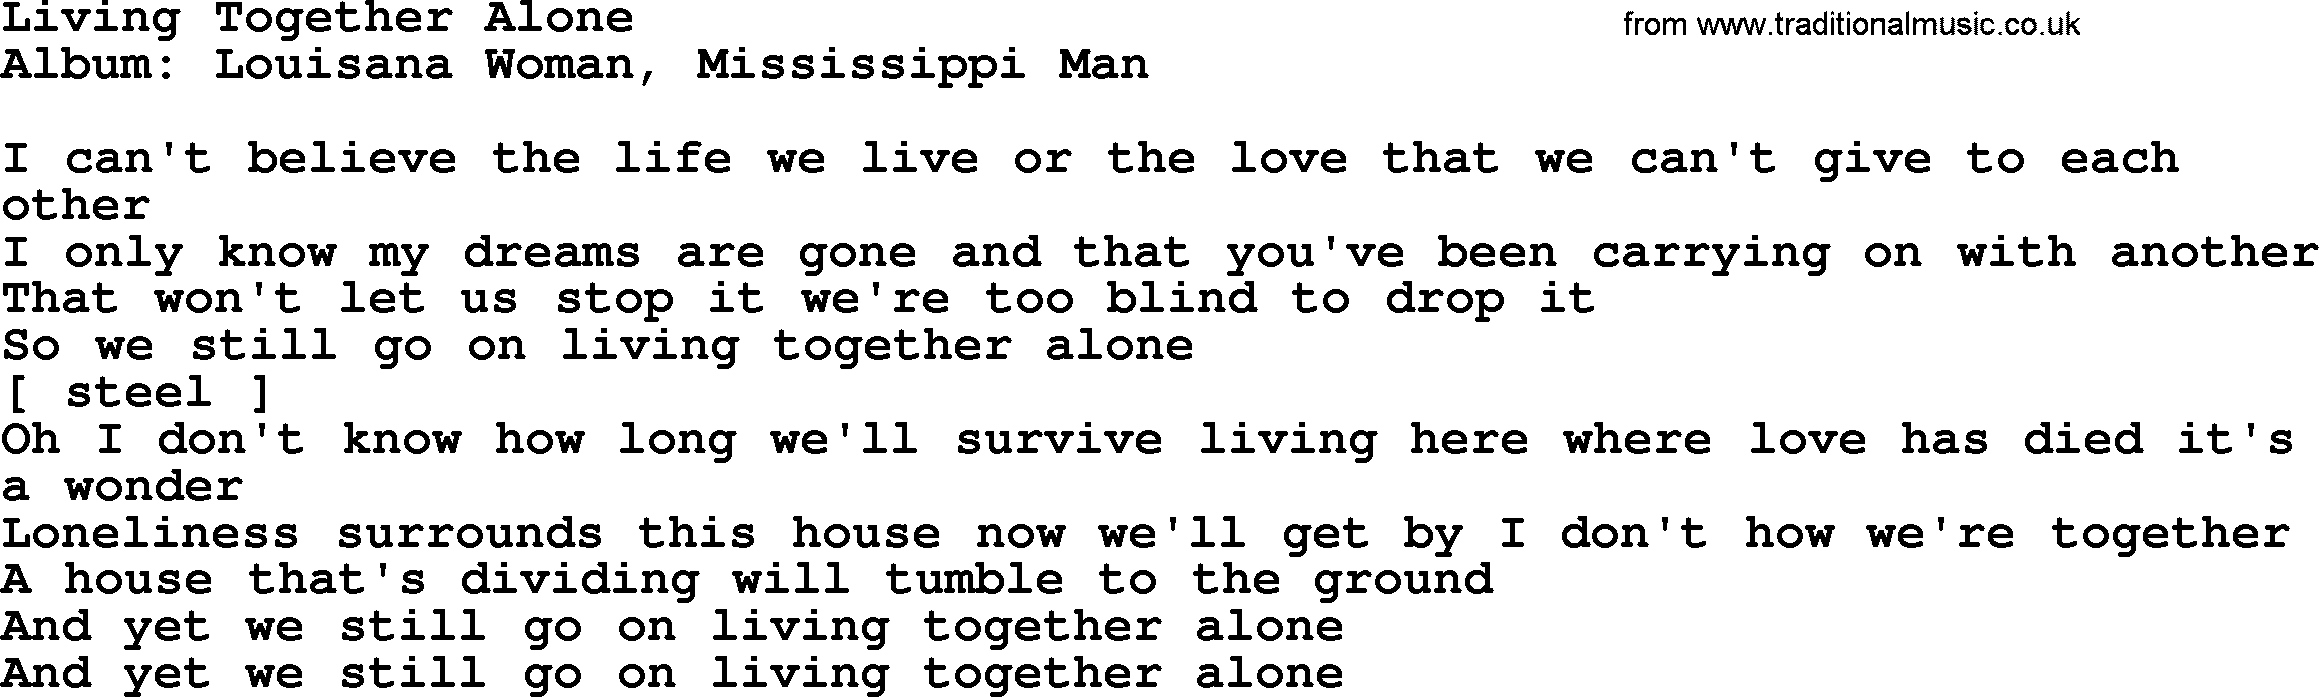 Loretta Lynn song: Living Together Alone lyrics